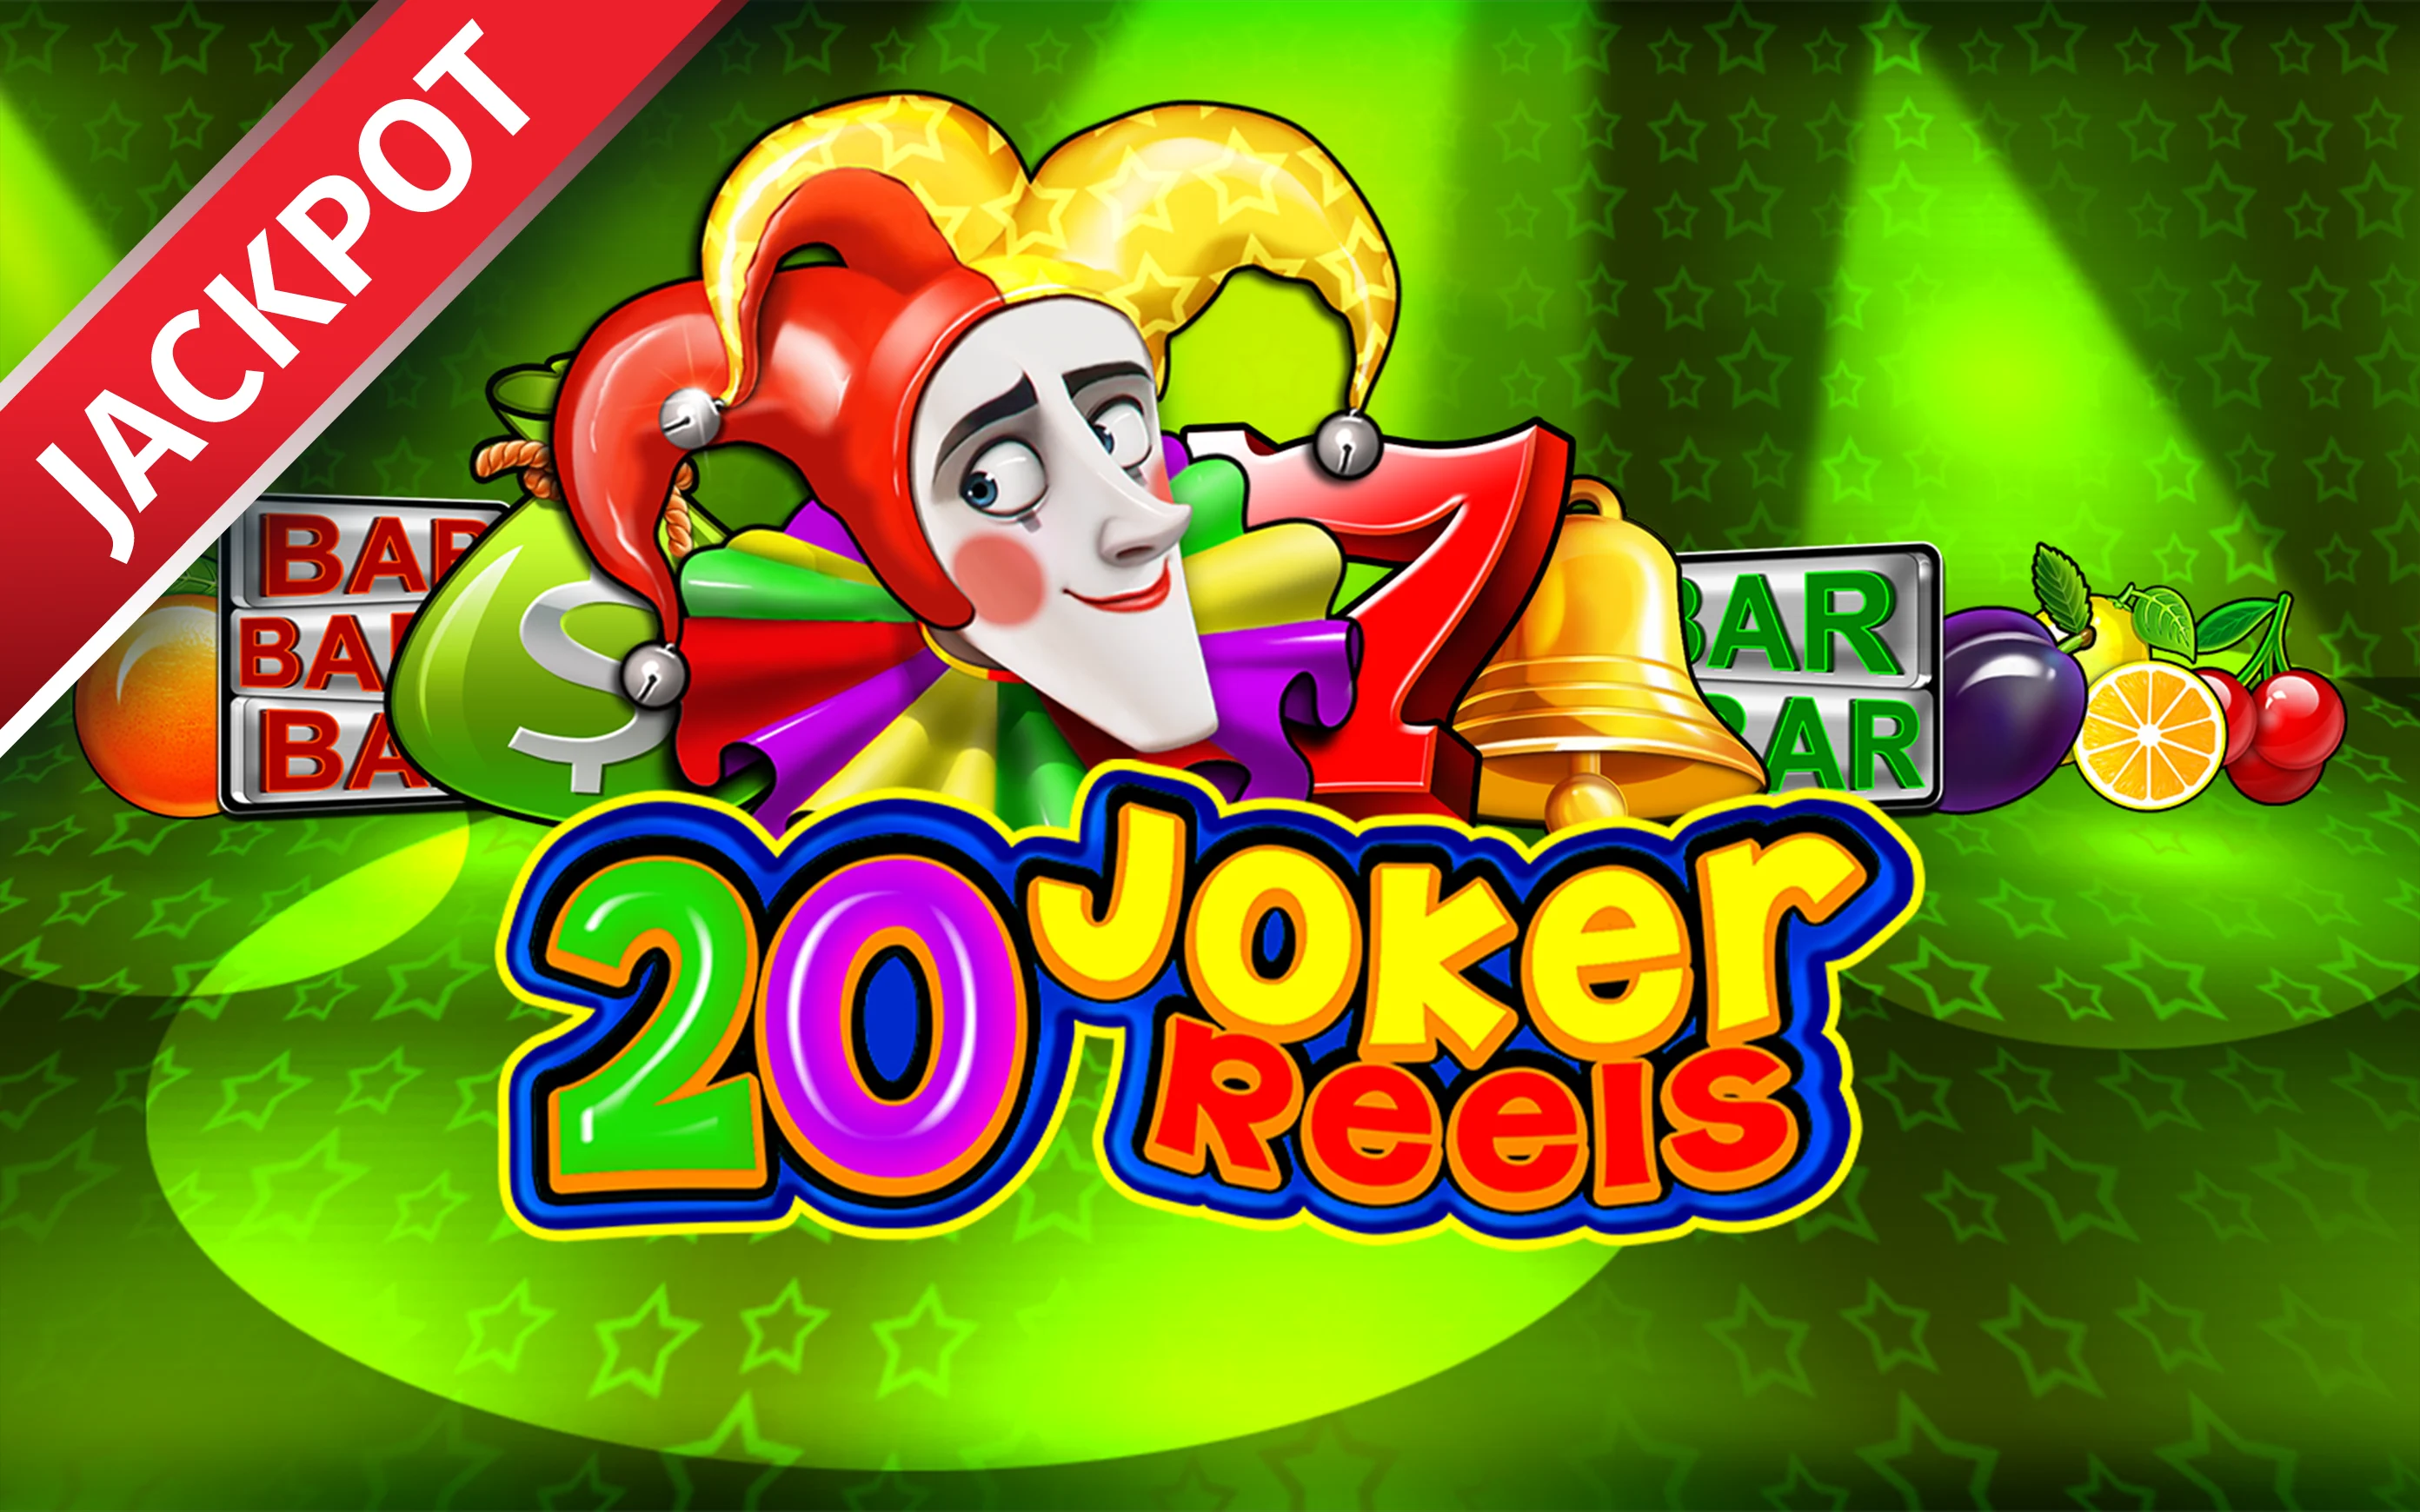 Play 20 Joker Reels on Starcasino.be online casino